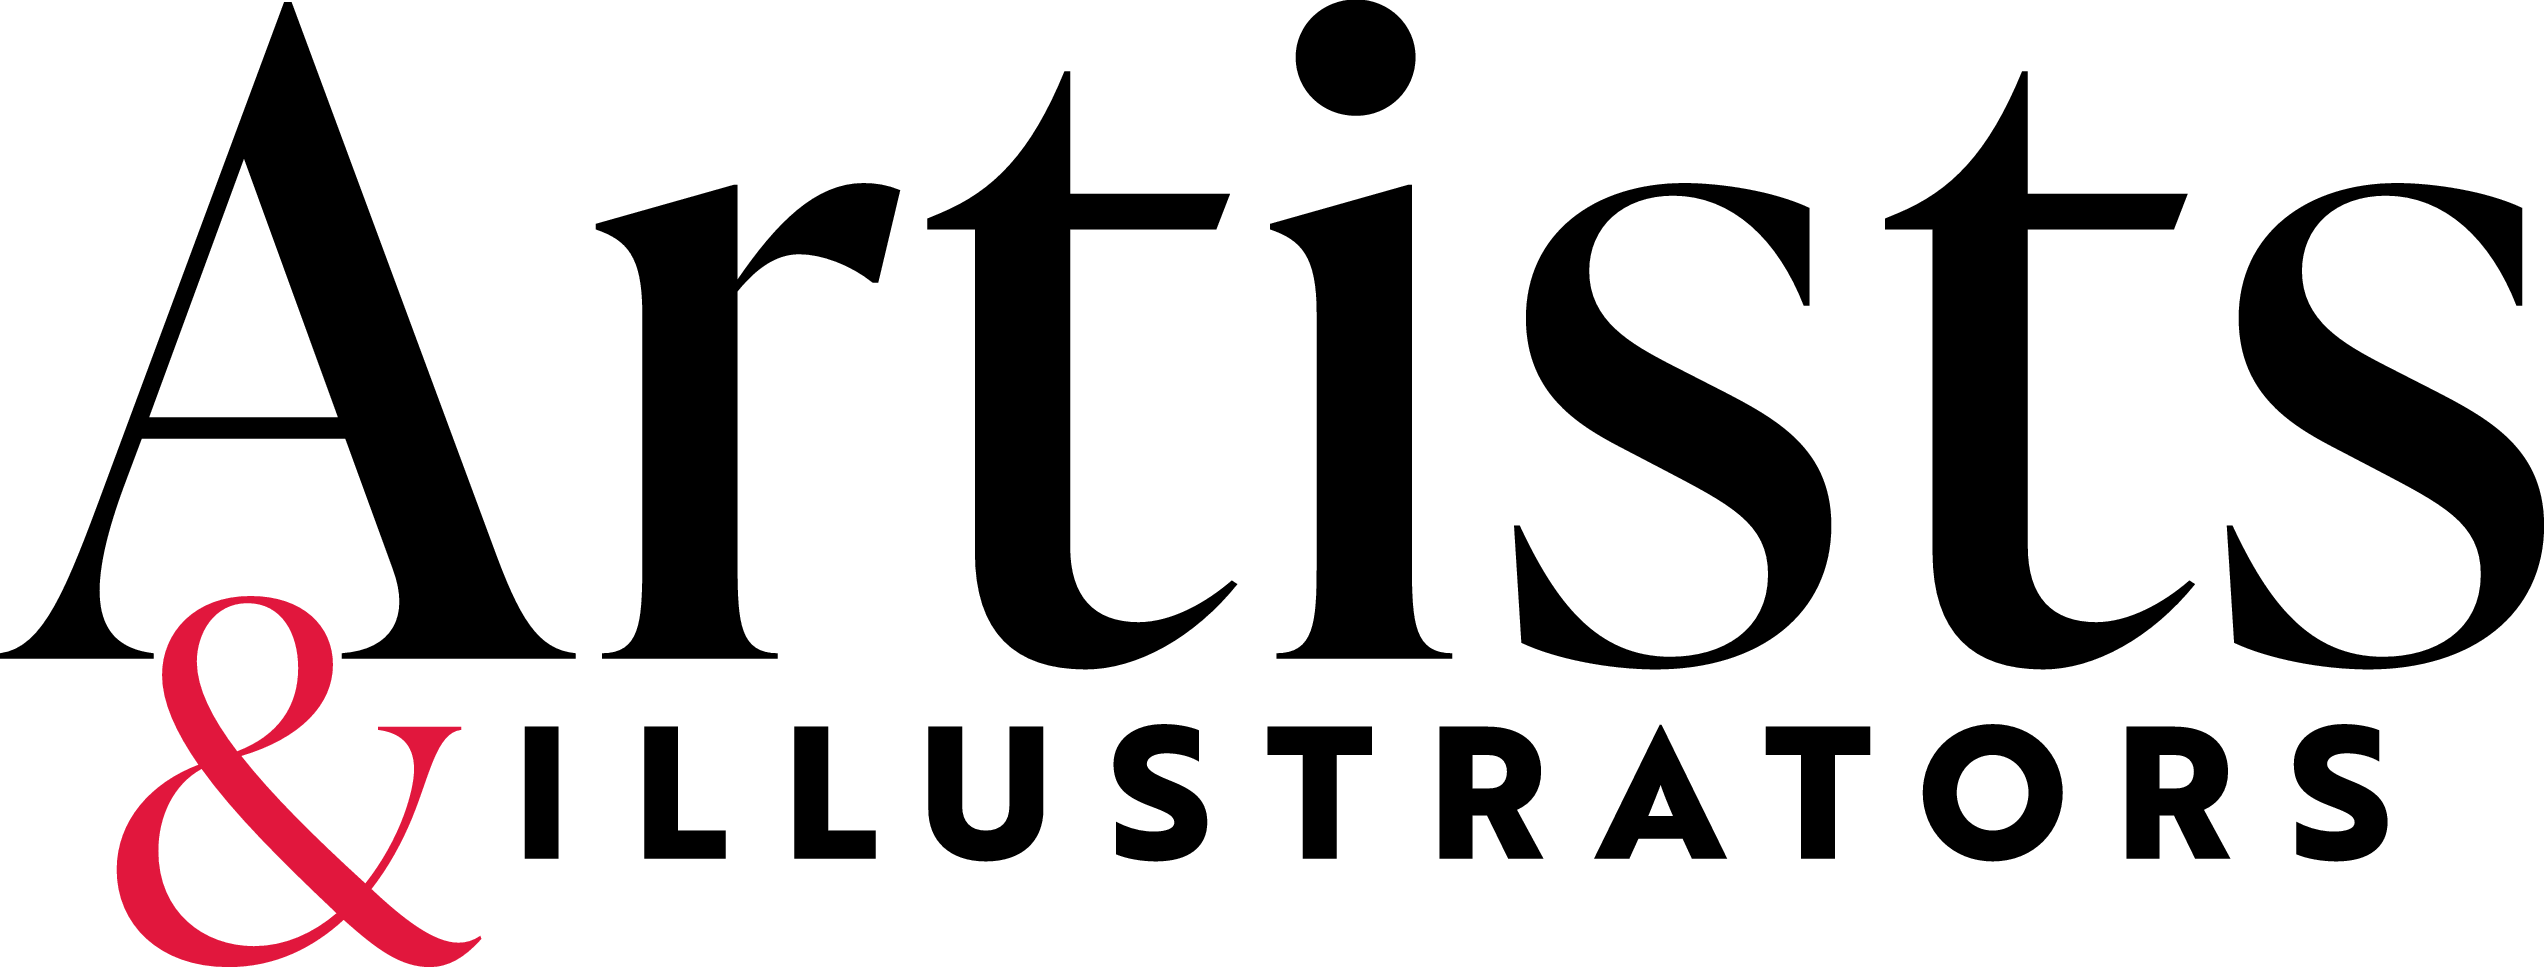 Artists & Illustratos